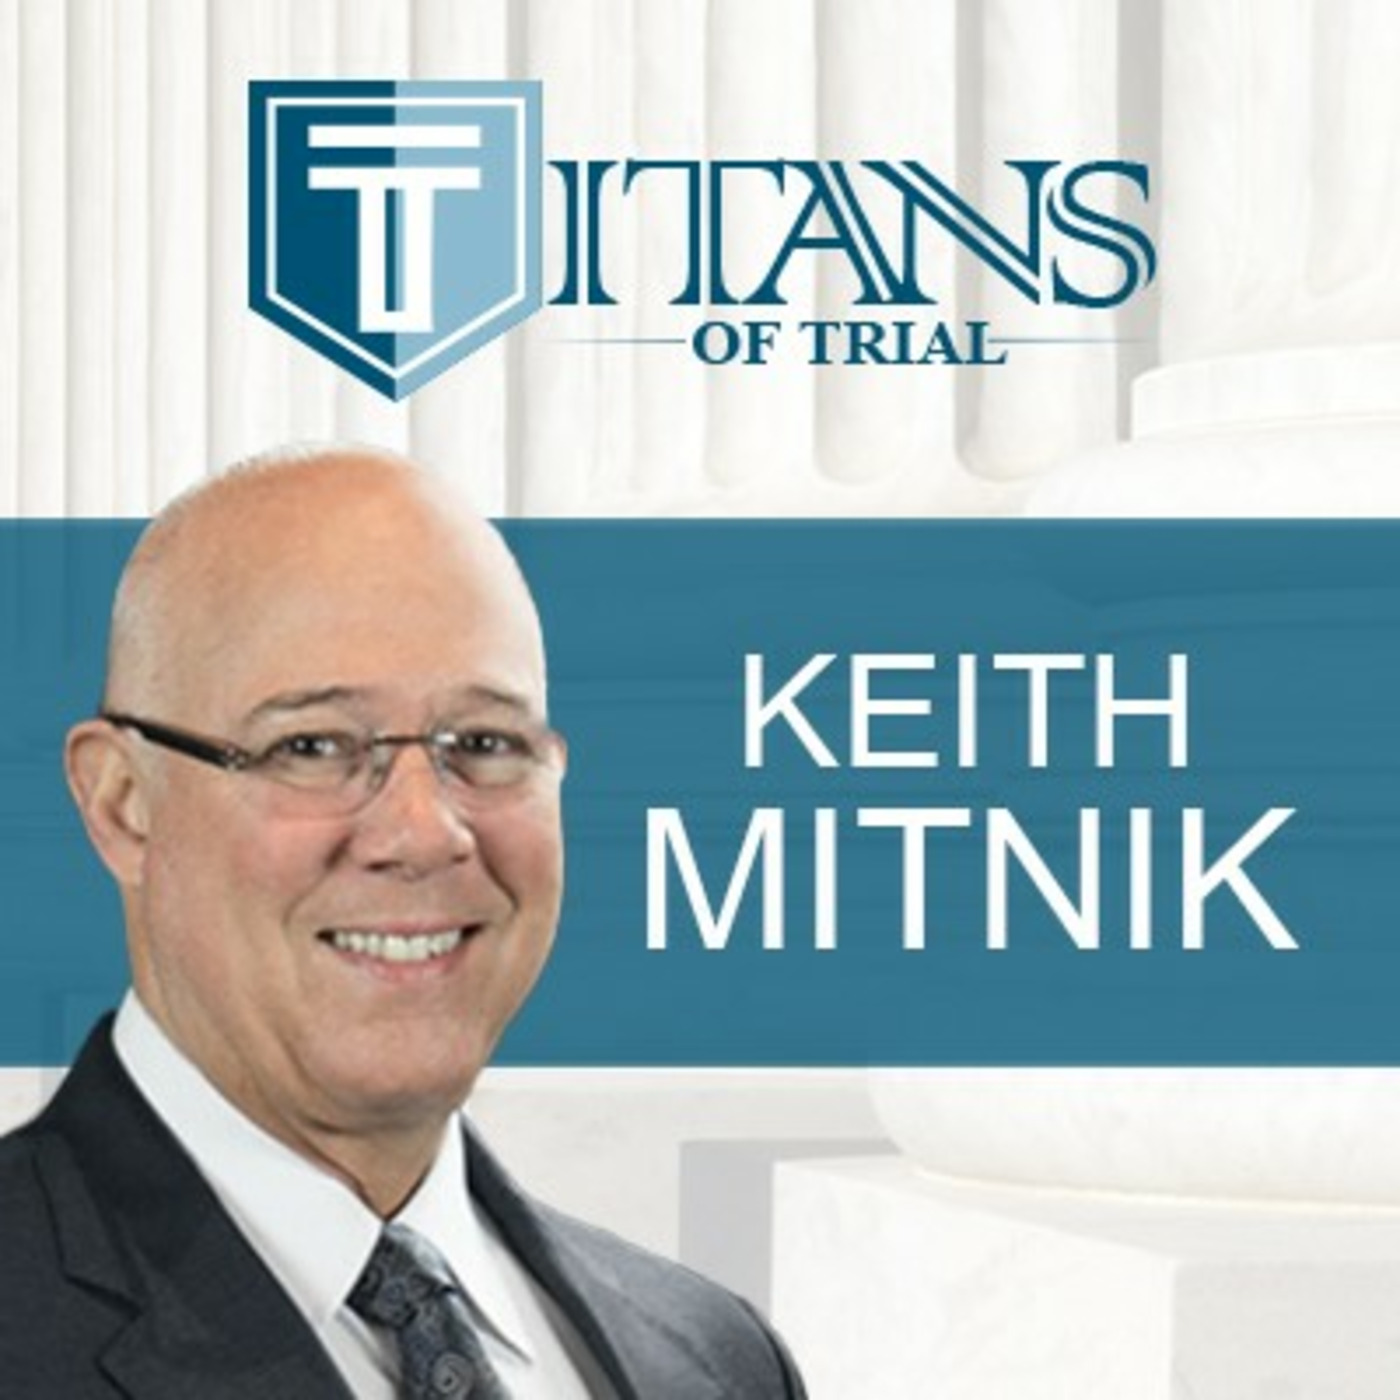 Titans of Trial – Keith Mitnik